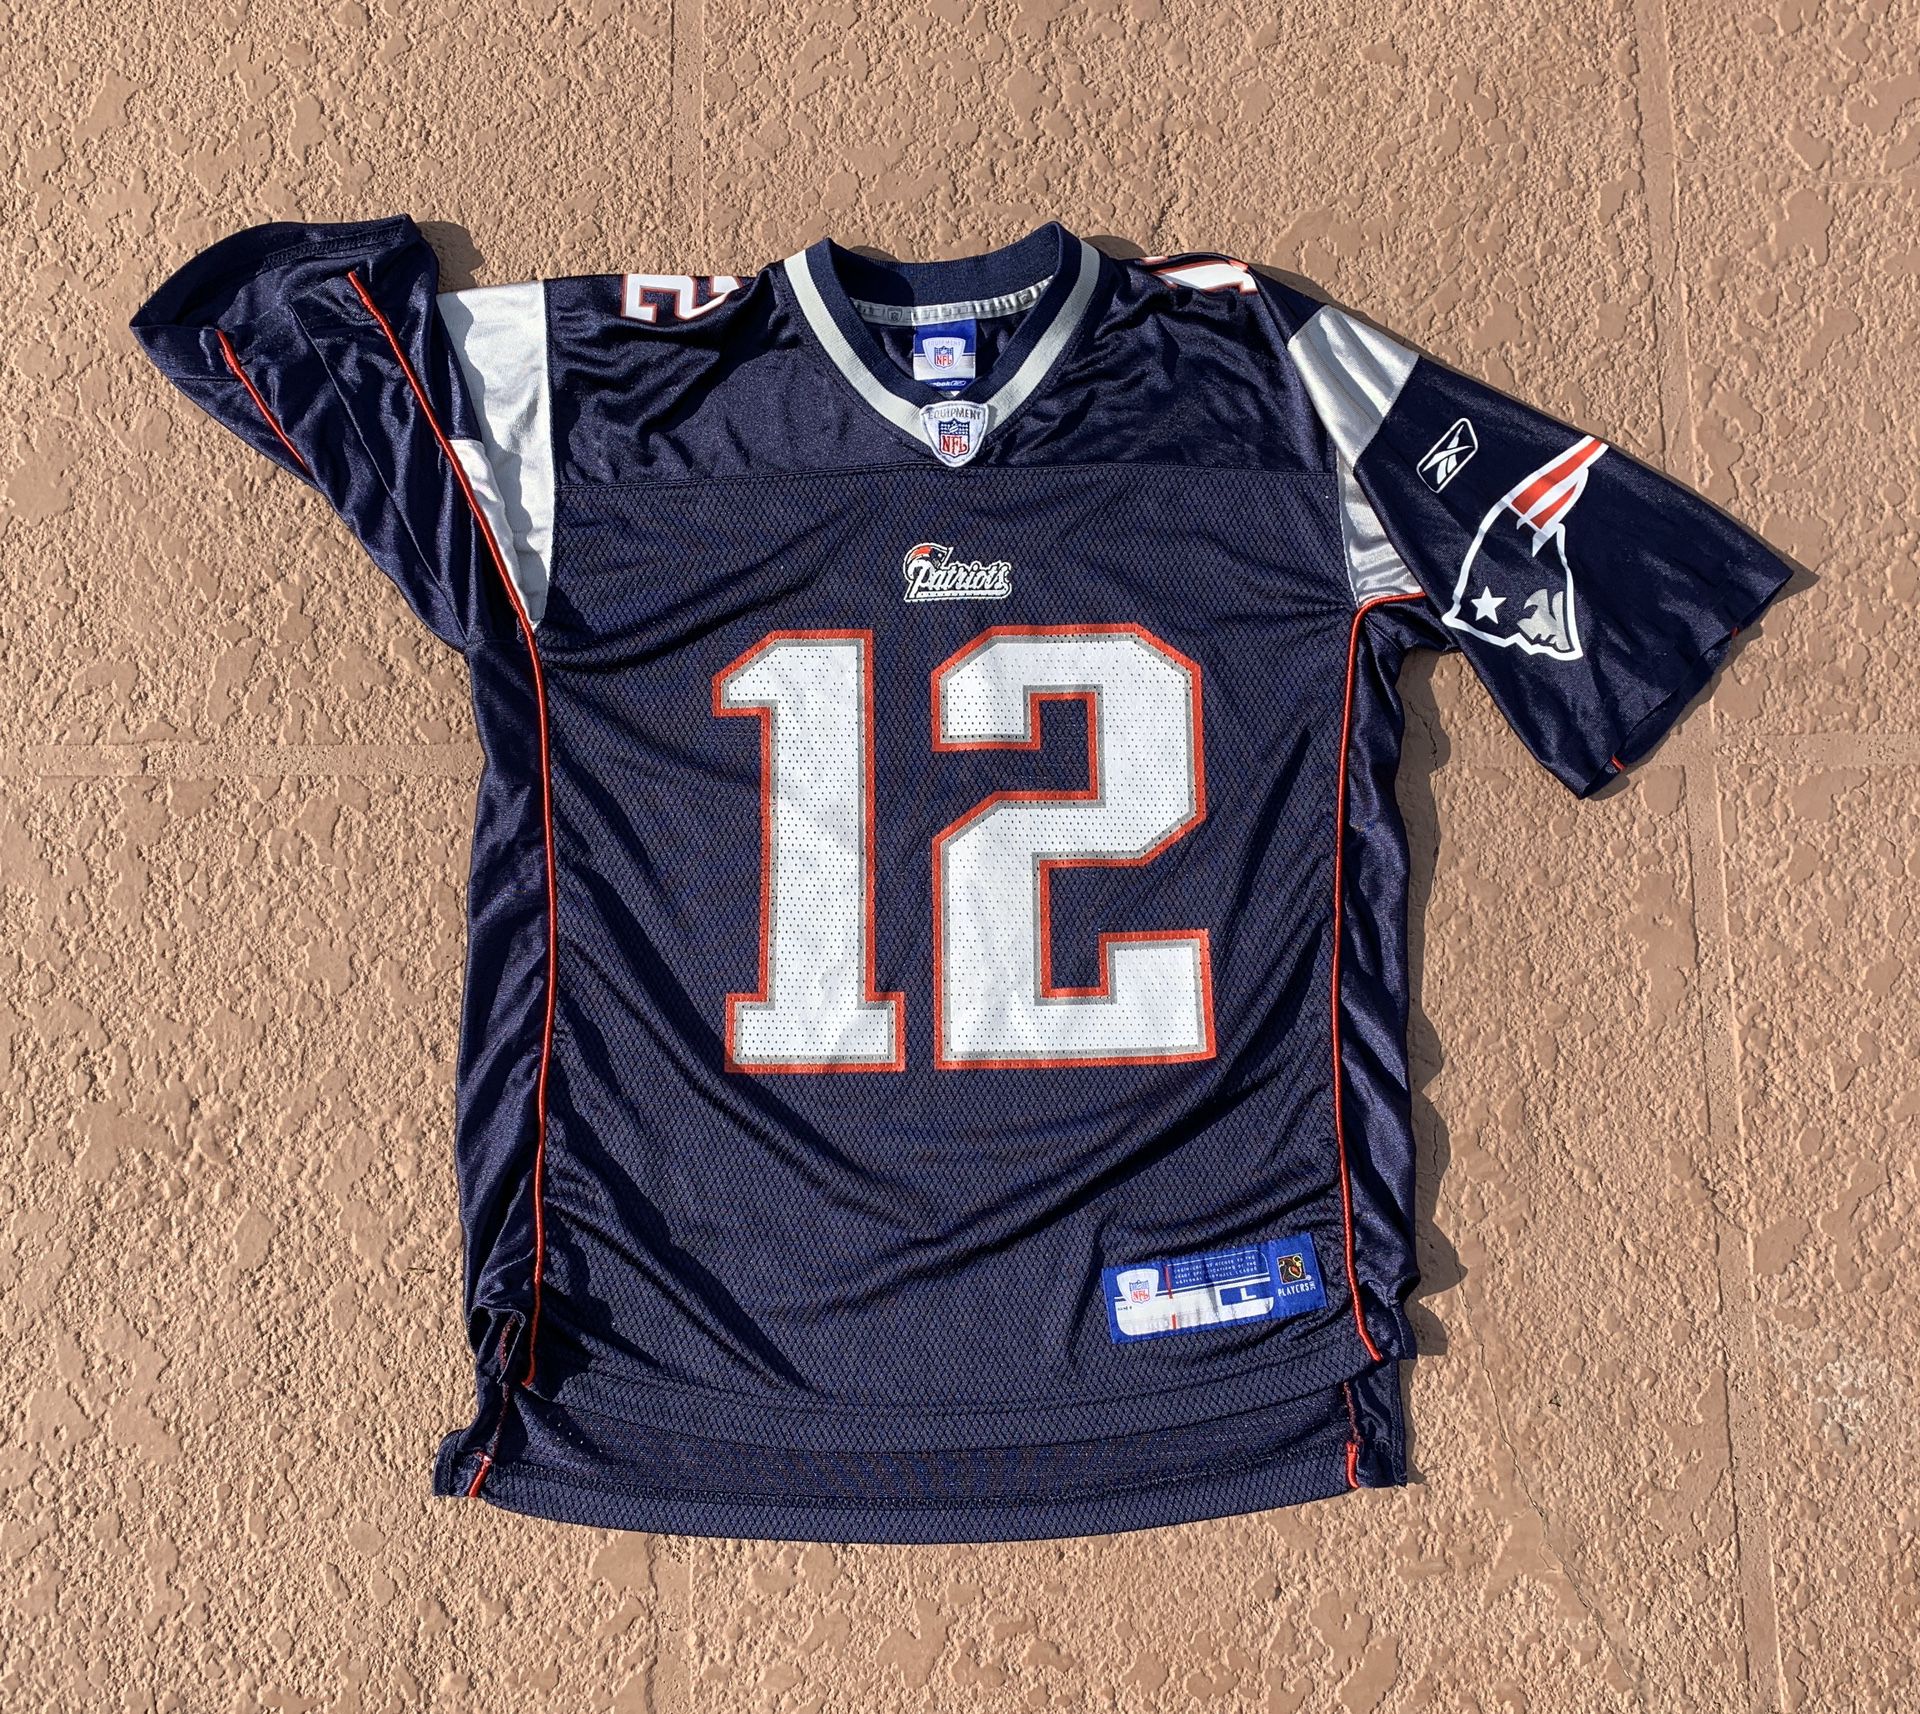 Brand new Reebok NFL Equipment Authentic New England Patriots Brady Jersey, men’s size large